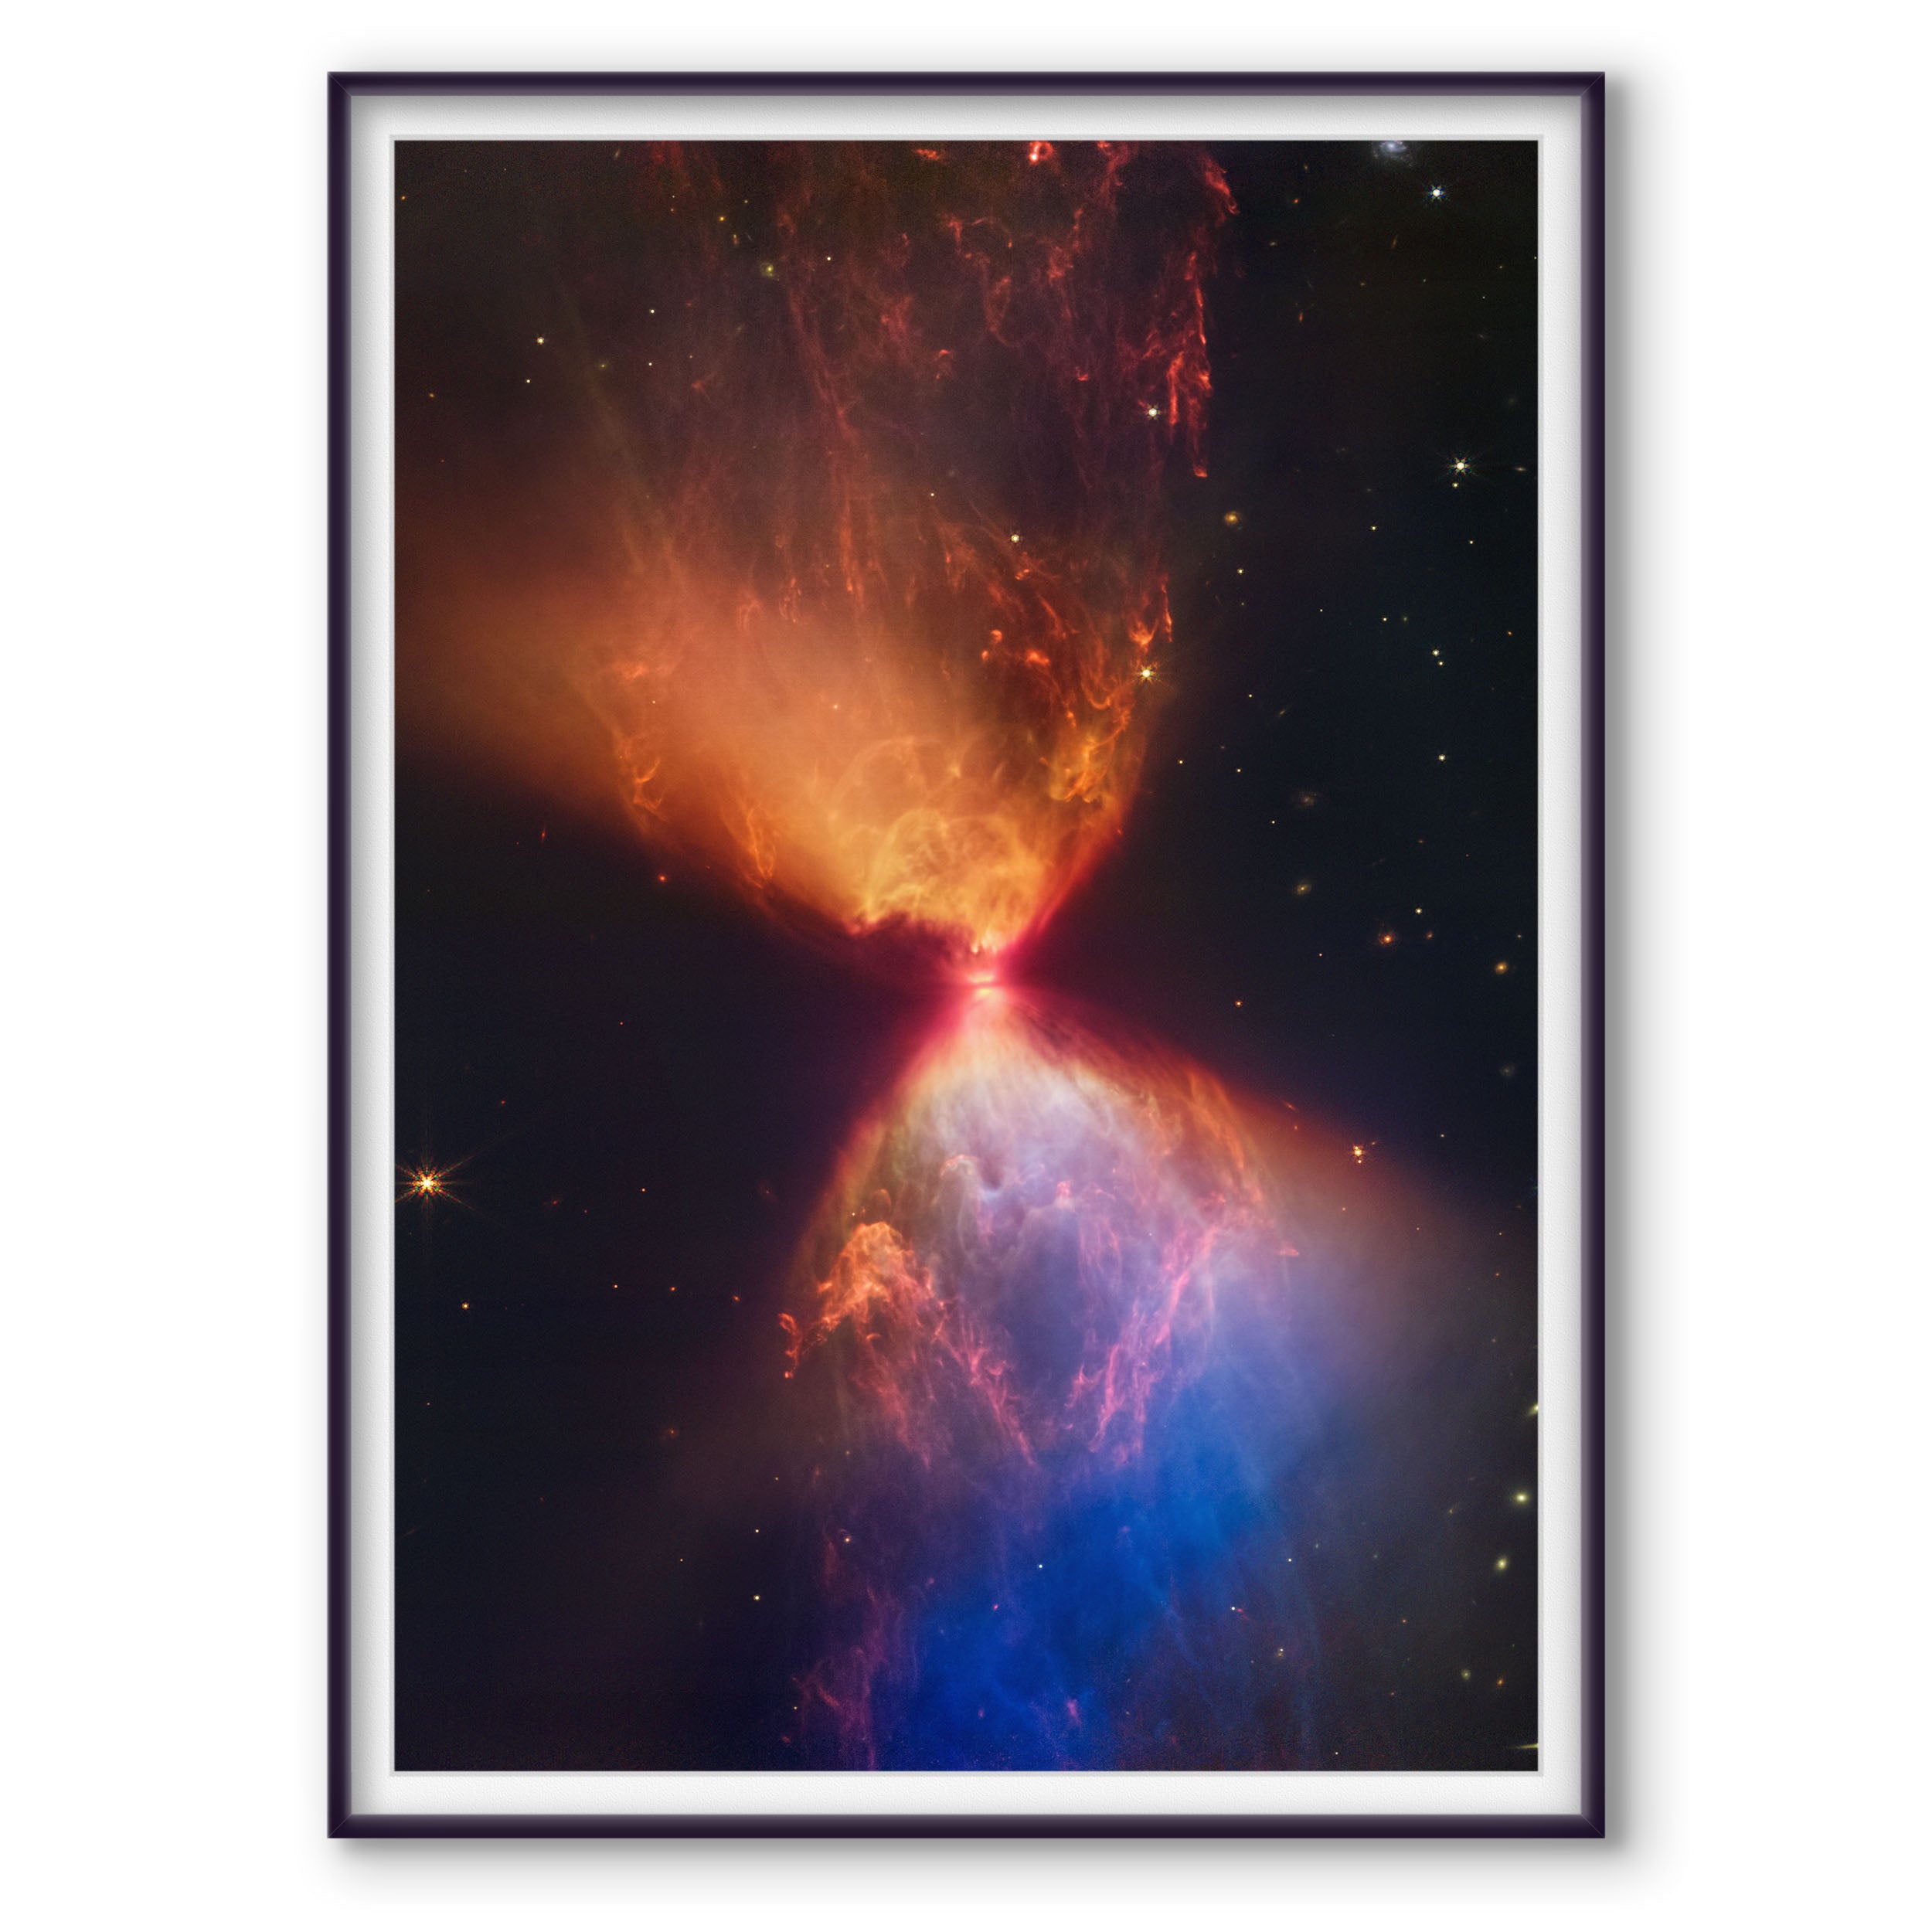 Protogwiazda L1527